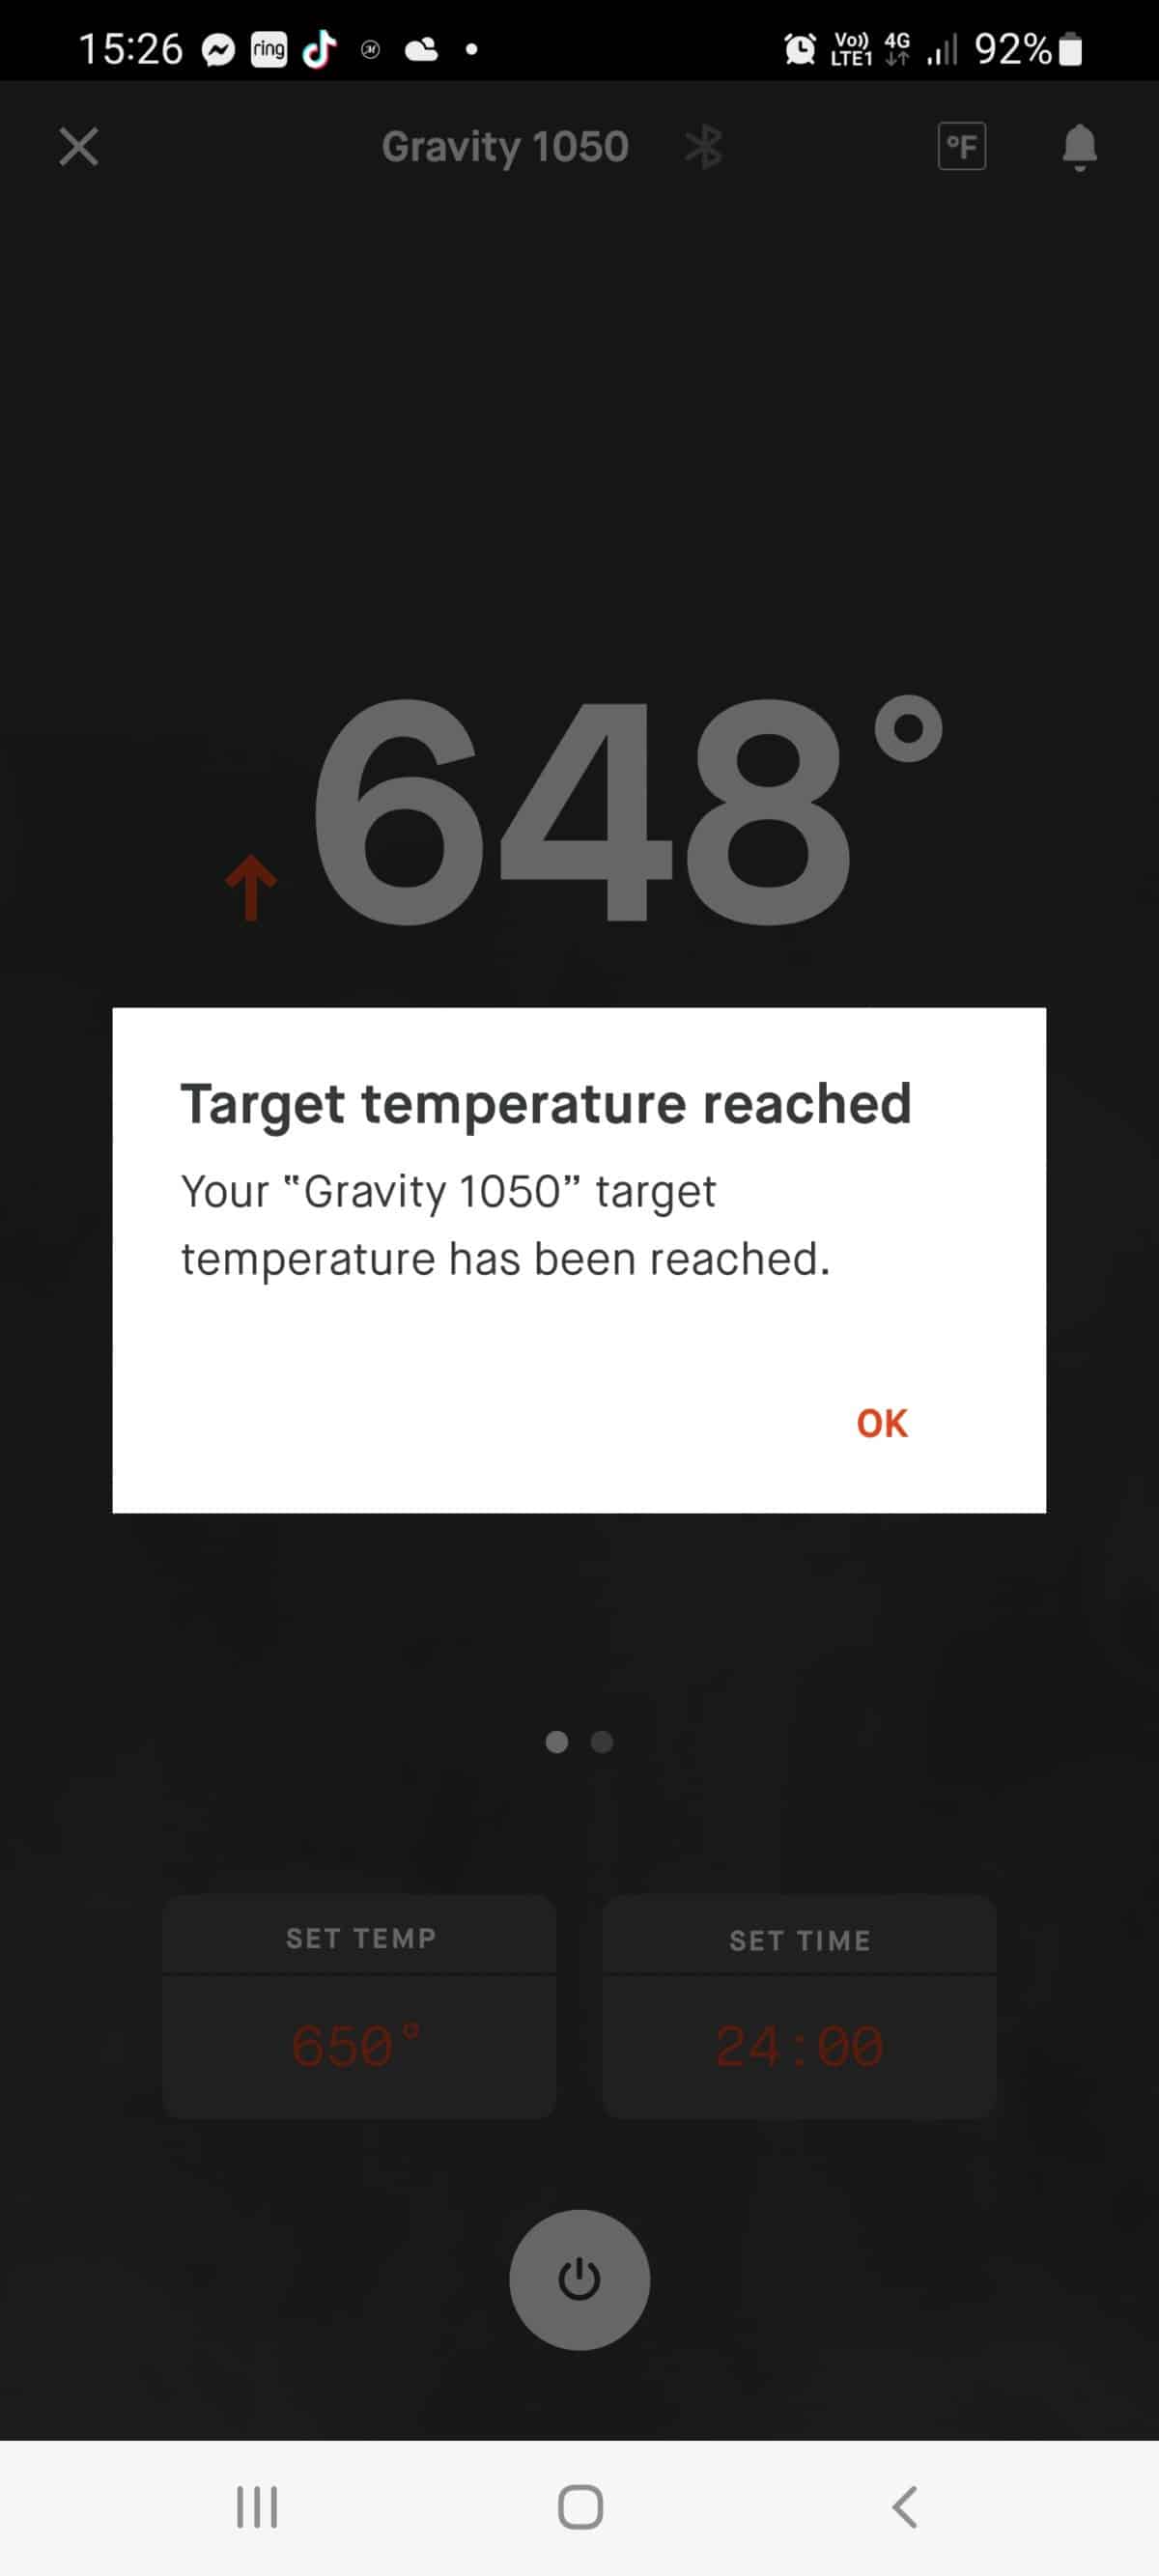 Masterbuilt gravity series smartphone app screenshot showing set temperature has been reached